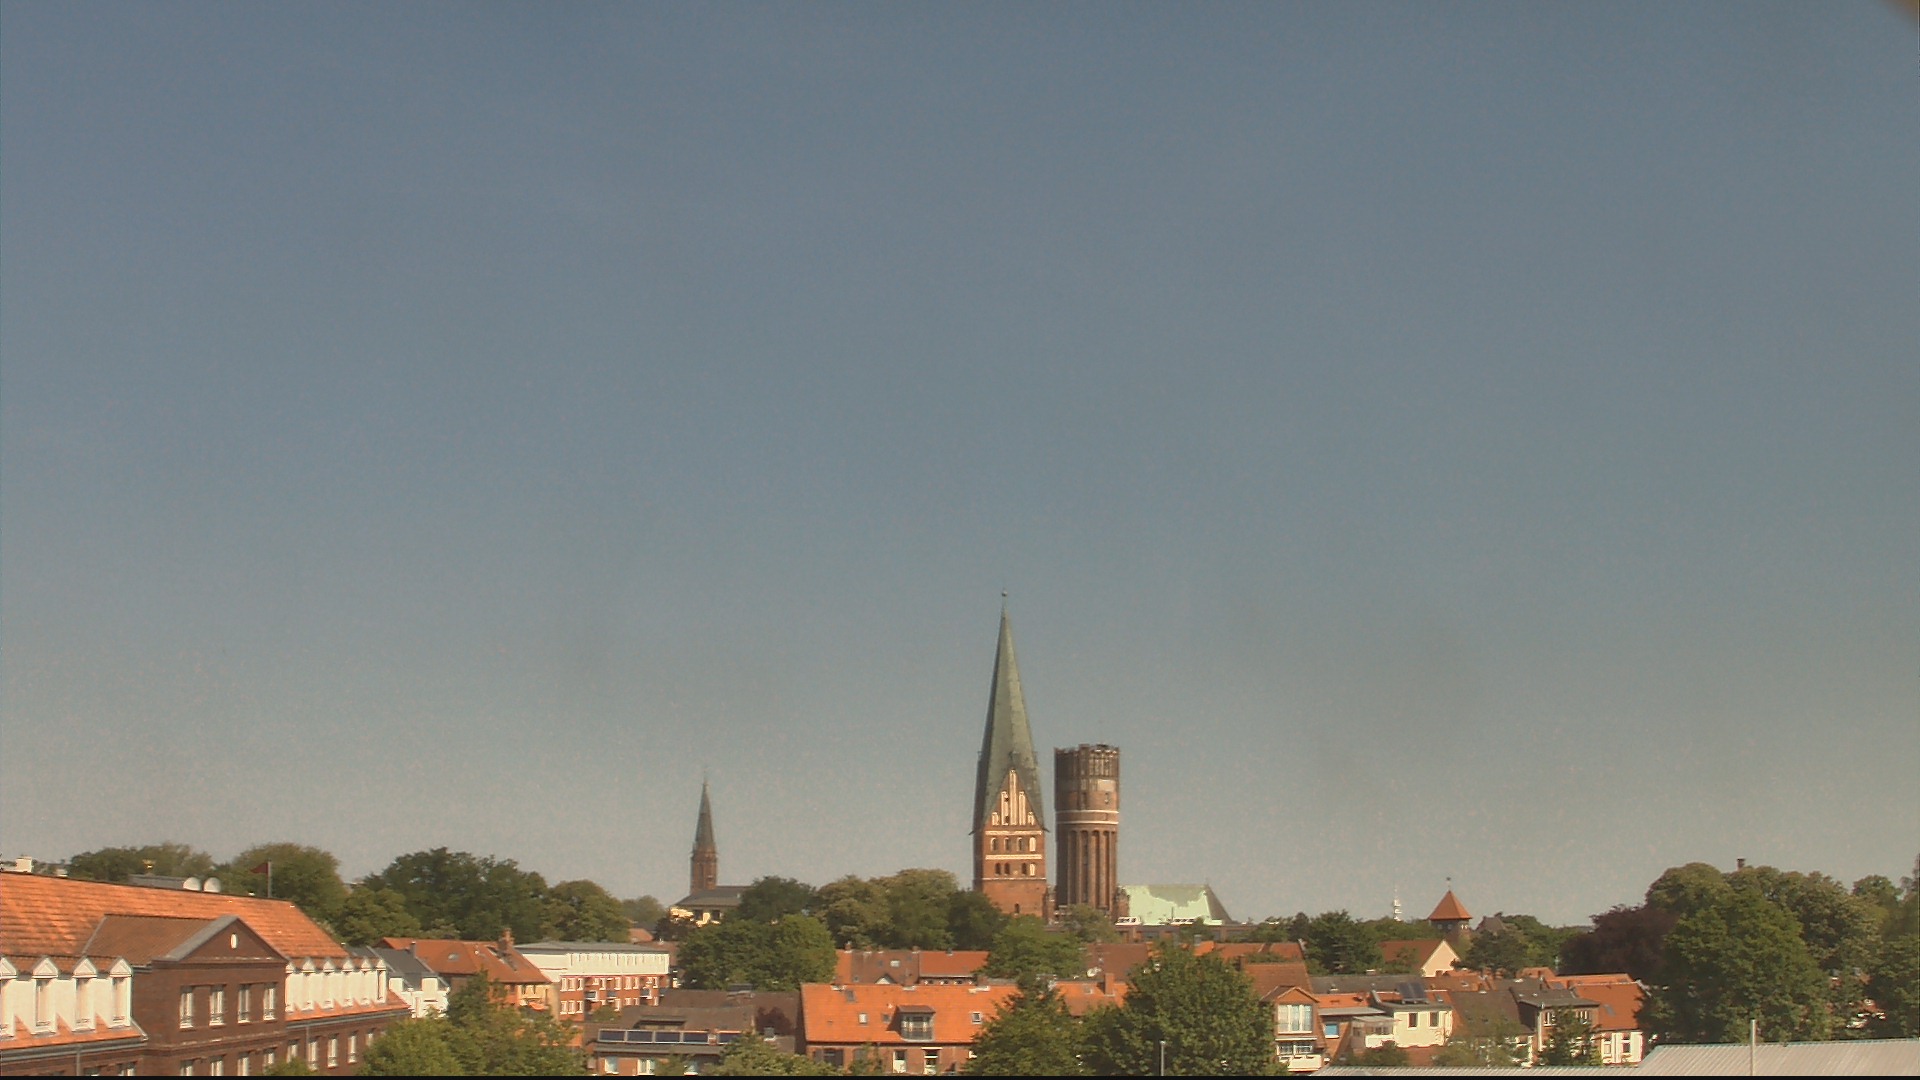 Lüneburg Tor. 10:47